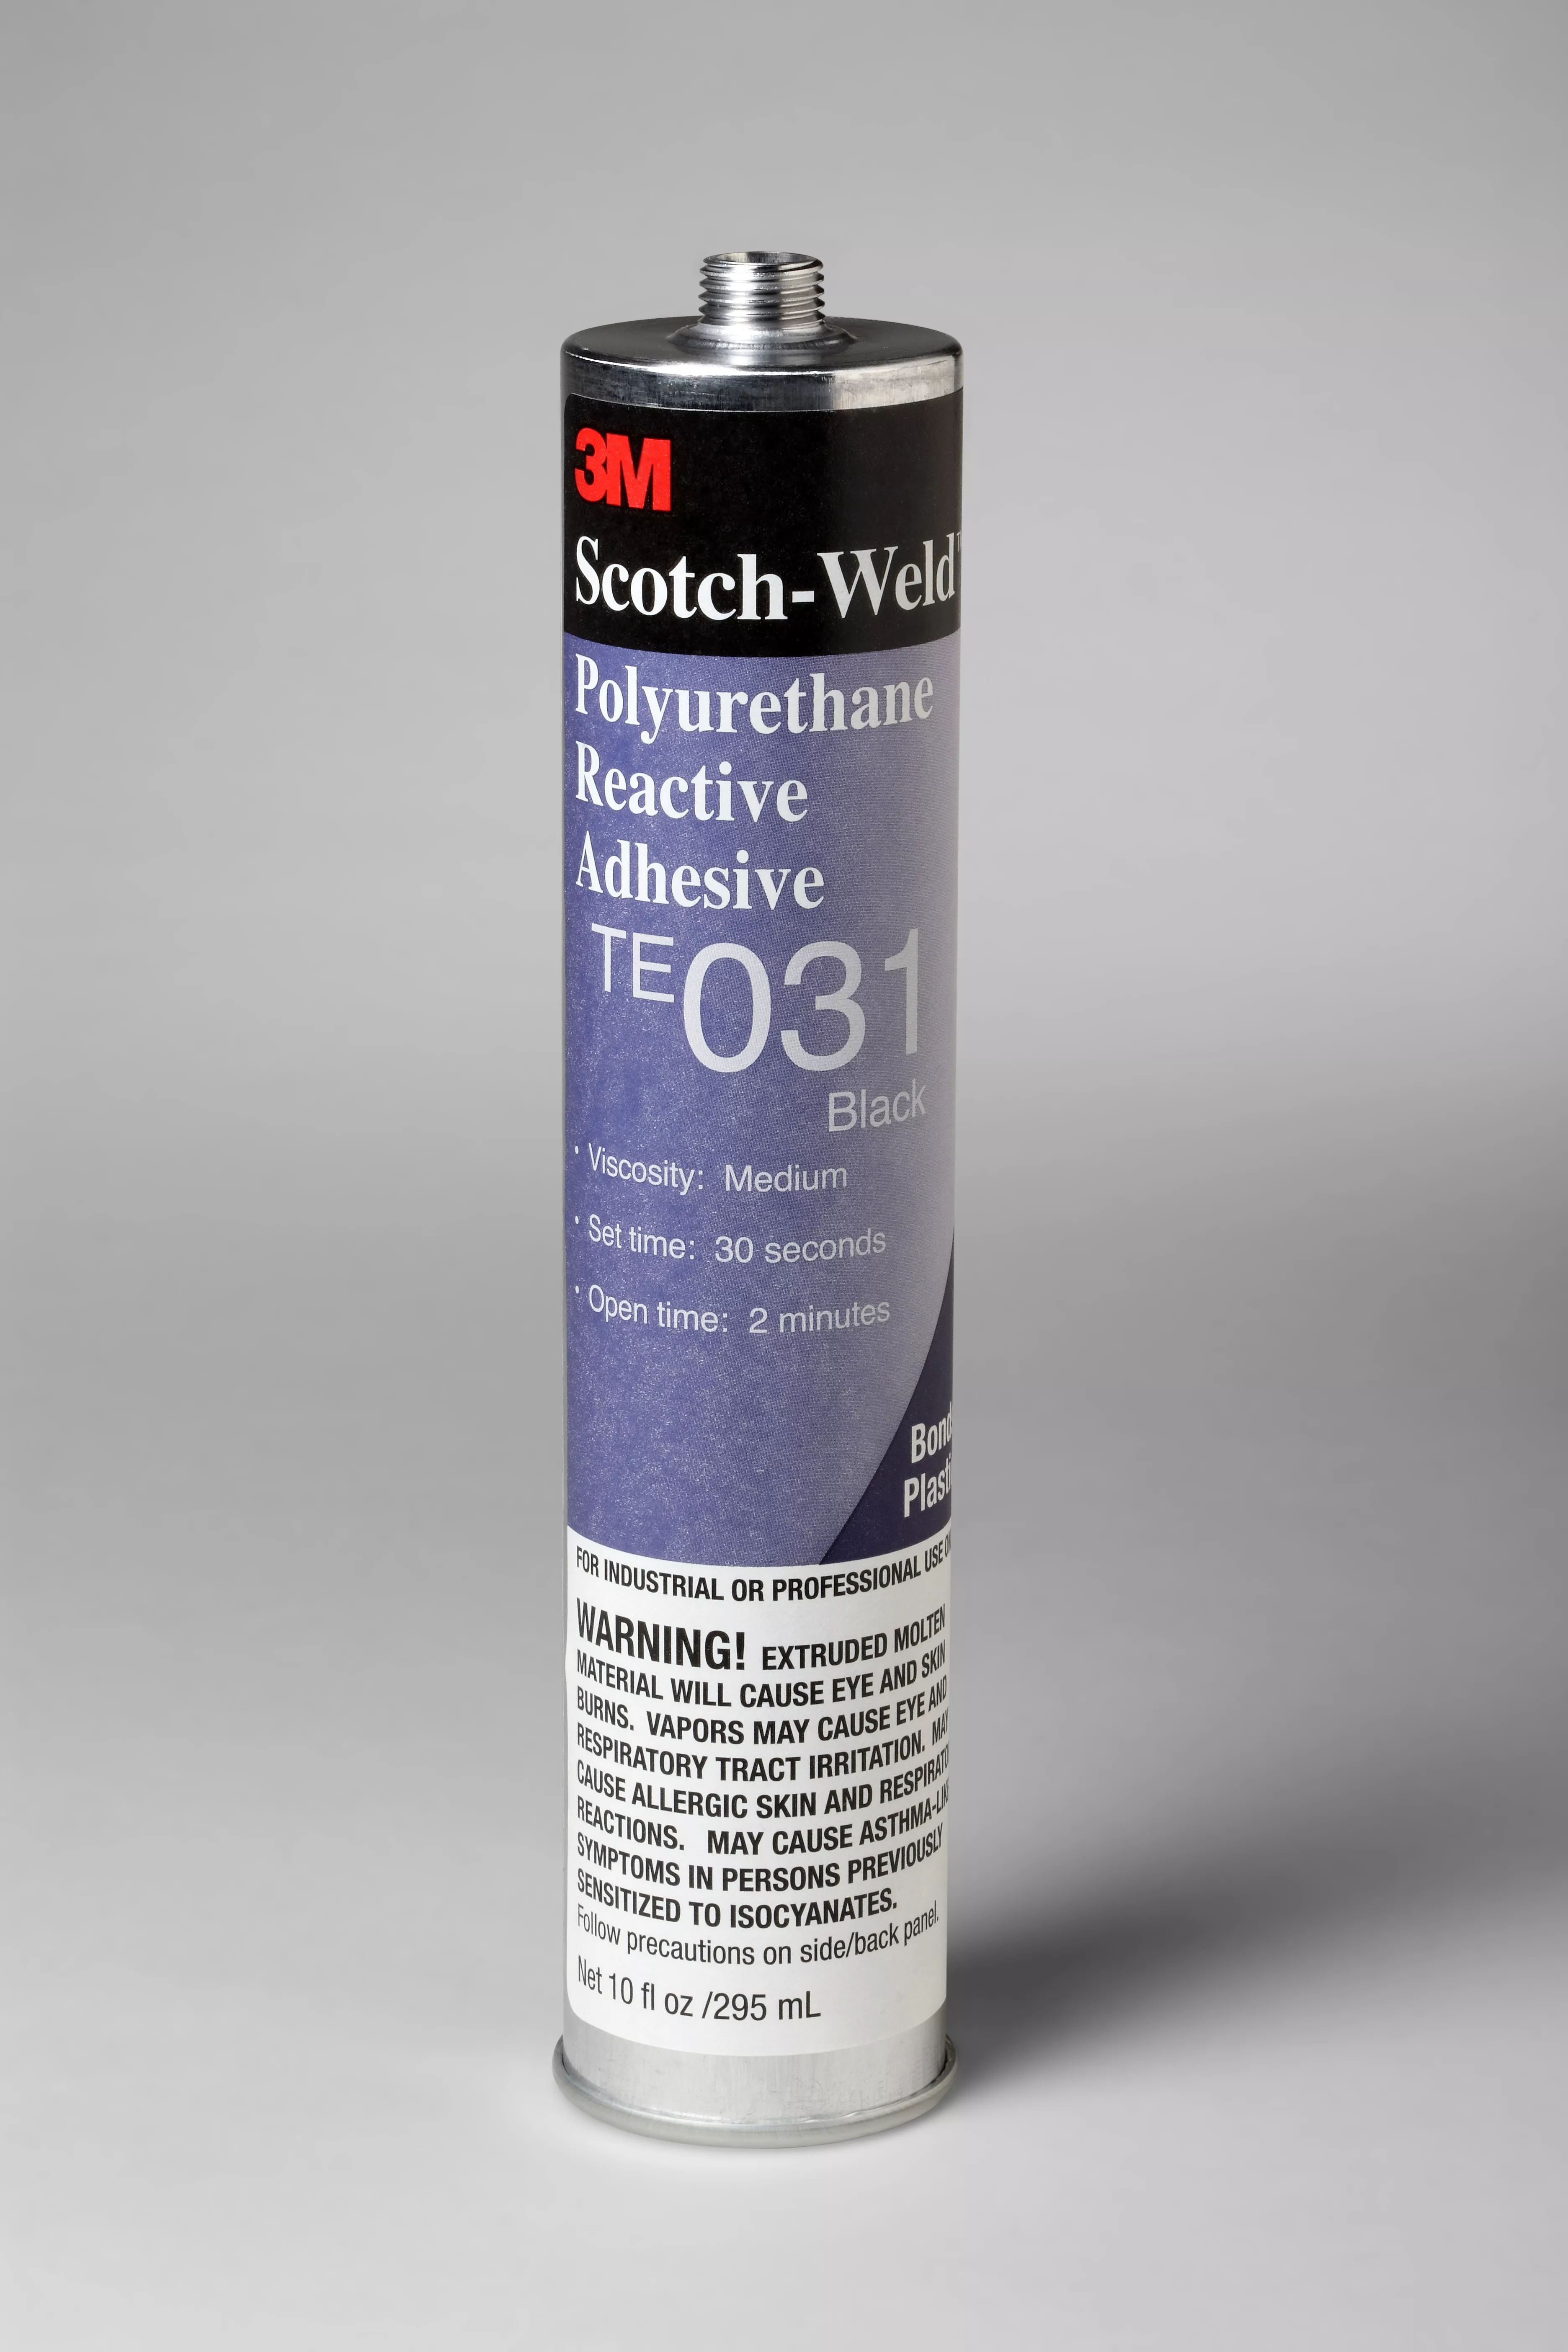 3M™ Scotch-Weld™ PUR Adhesive TE031, Black, 1/10 Gallon Cartidge, 5
Canister/Case